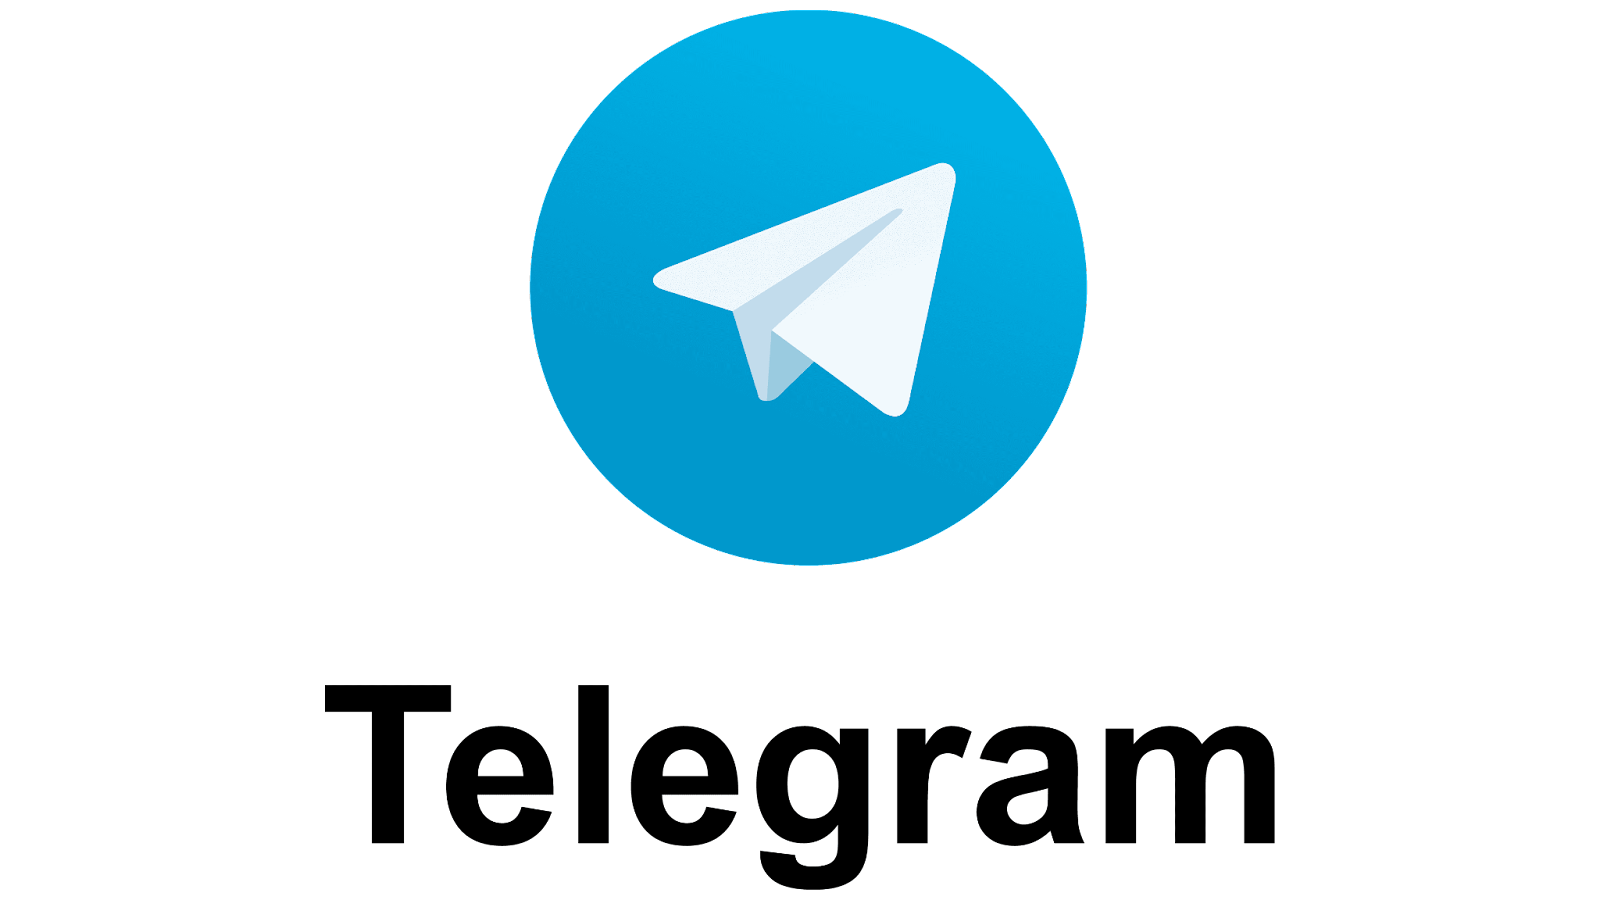 Telegram pictures. Телеграмм. Логотип телеграмм. Пиктограмма телеграмм. Прозрачный значок телеграмм.